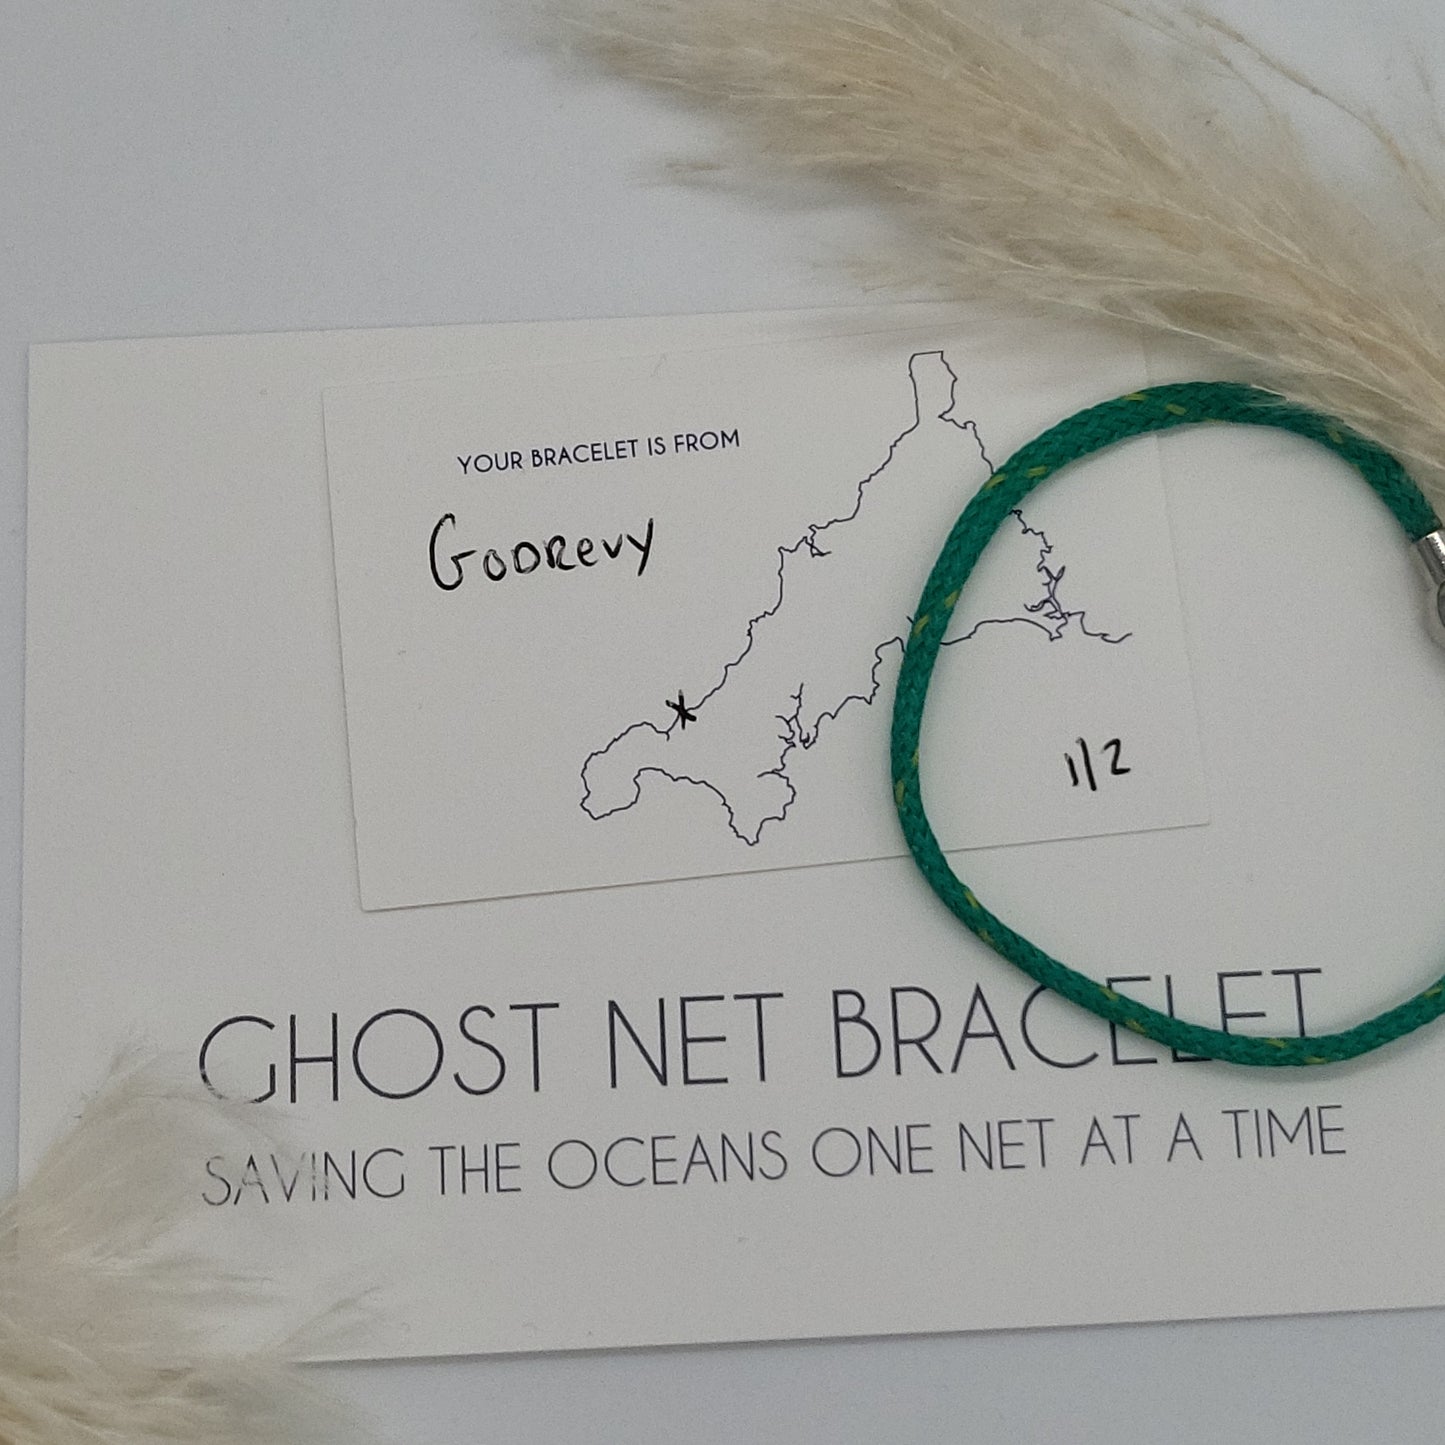 Godrevy Ghost Net Bracelet (Green and Yellow)- Medium